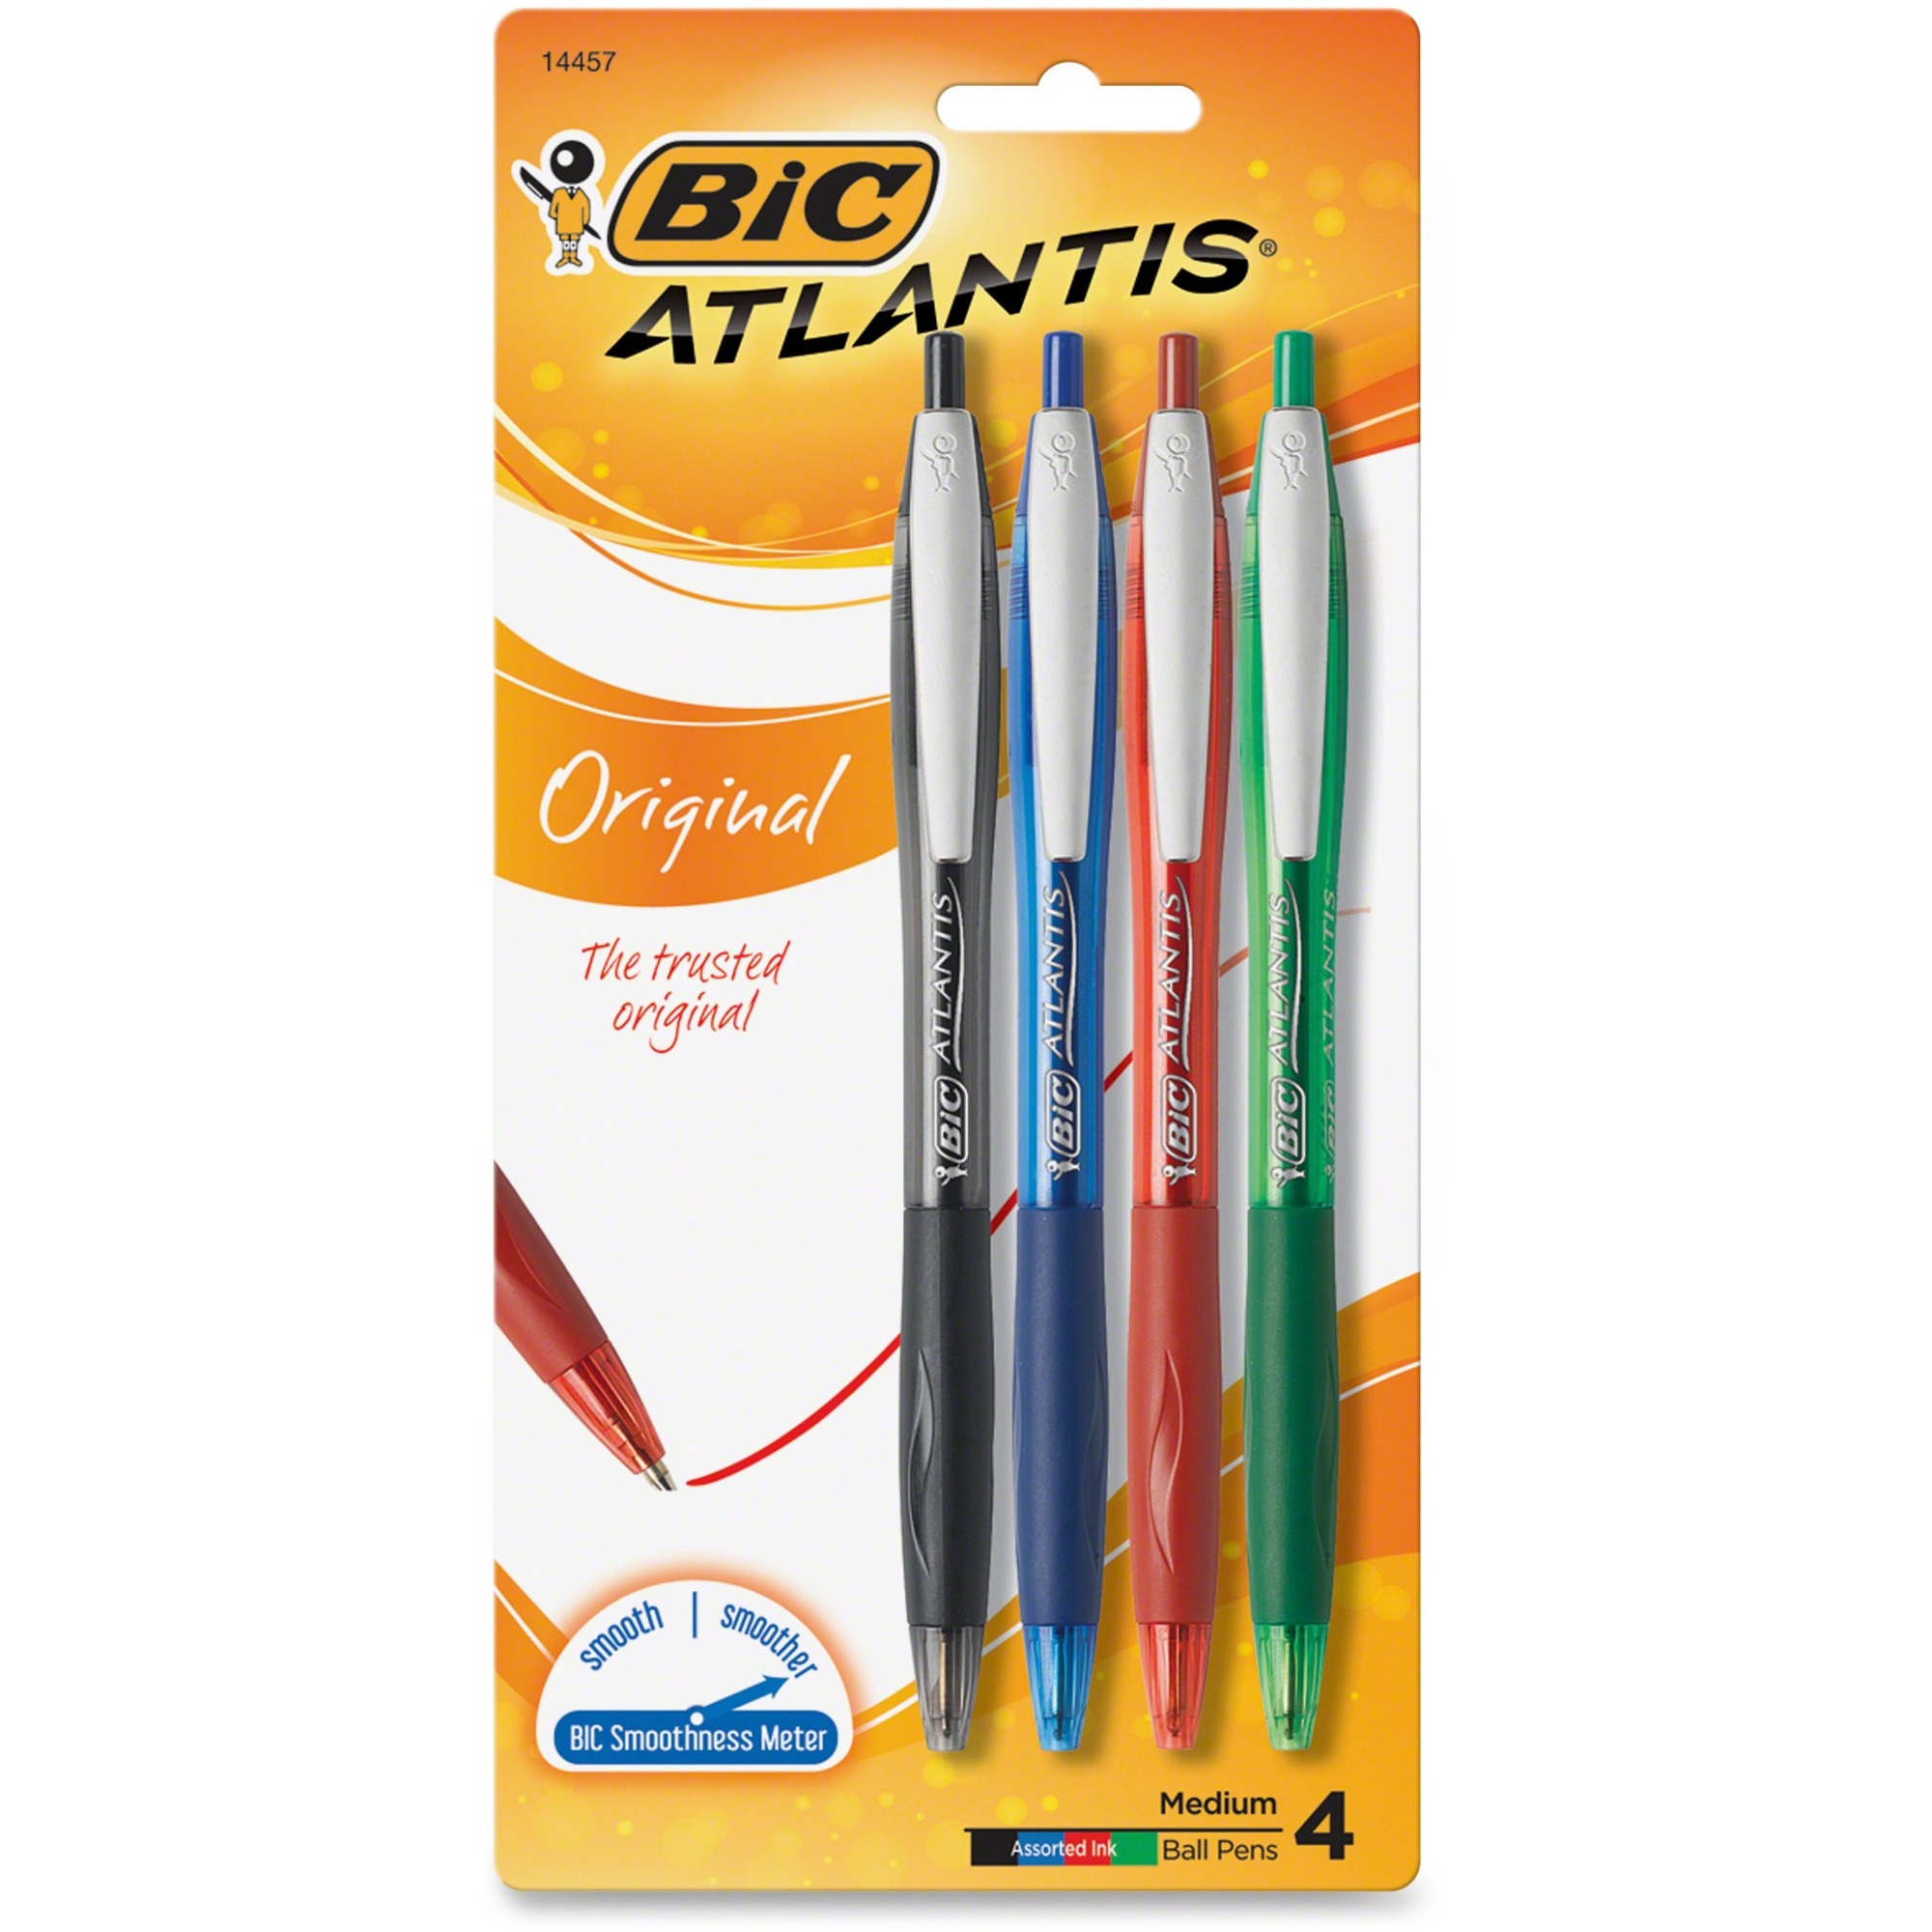 BIC Atlantis Easy Glide Retractable Ball Pens - 4/Pack